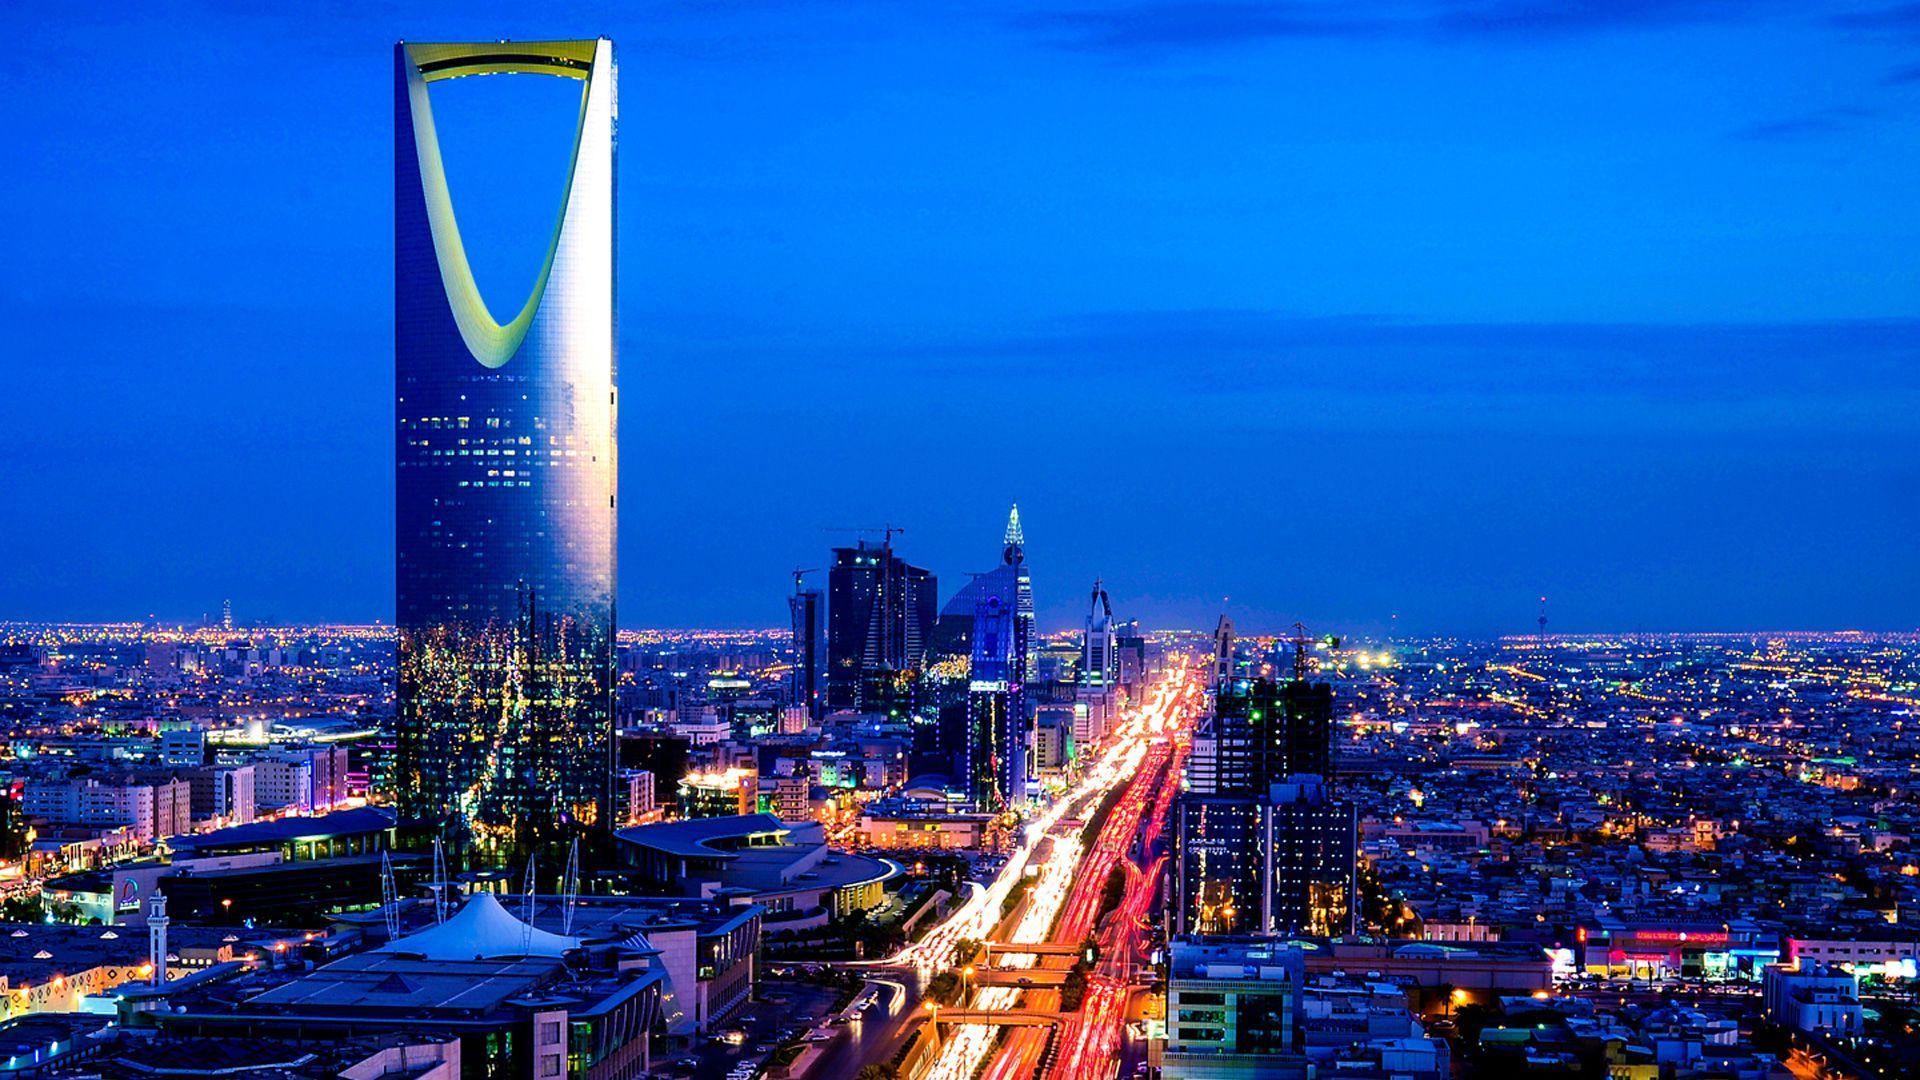 Riyadh Wallpapers - Top Free Riyadh Backgrounds ...